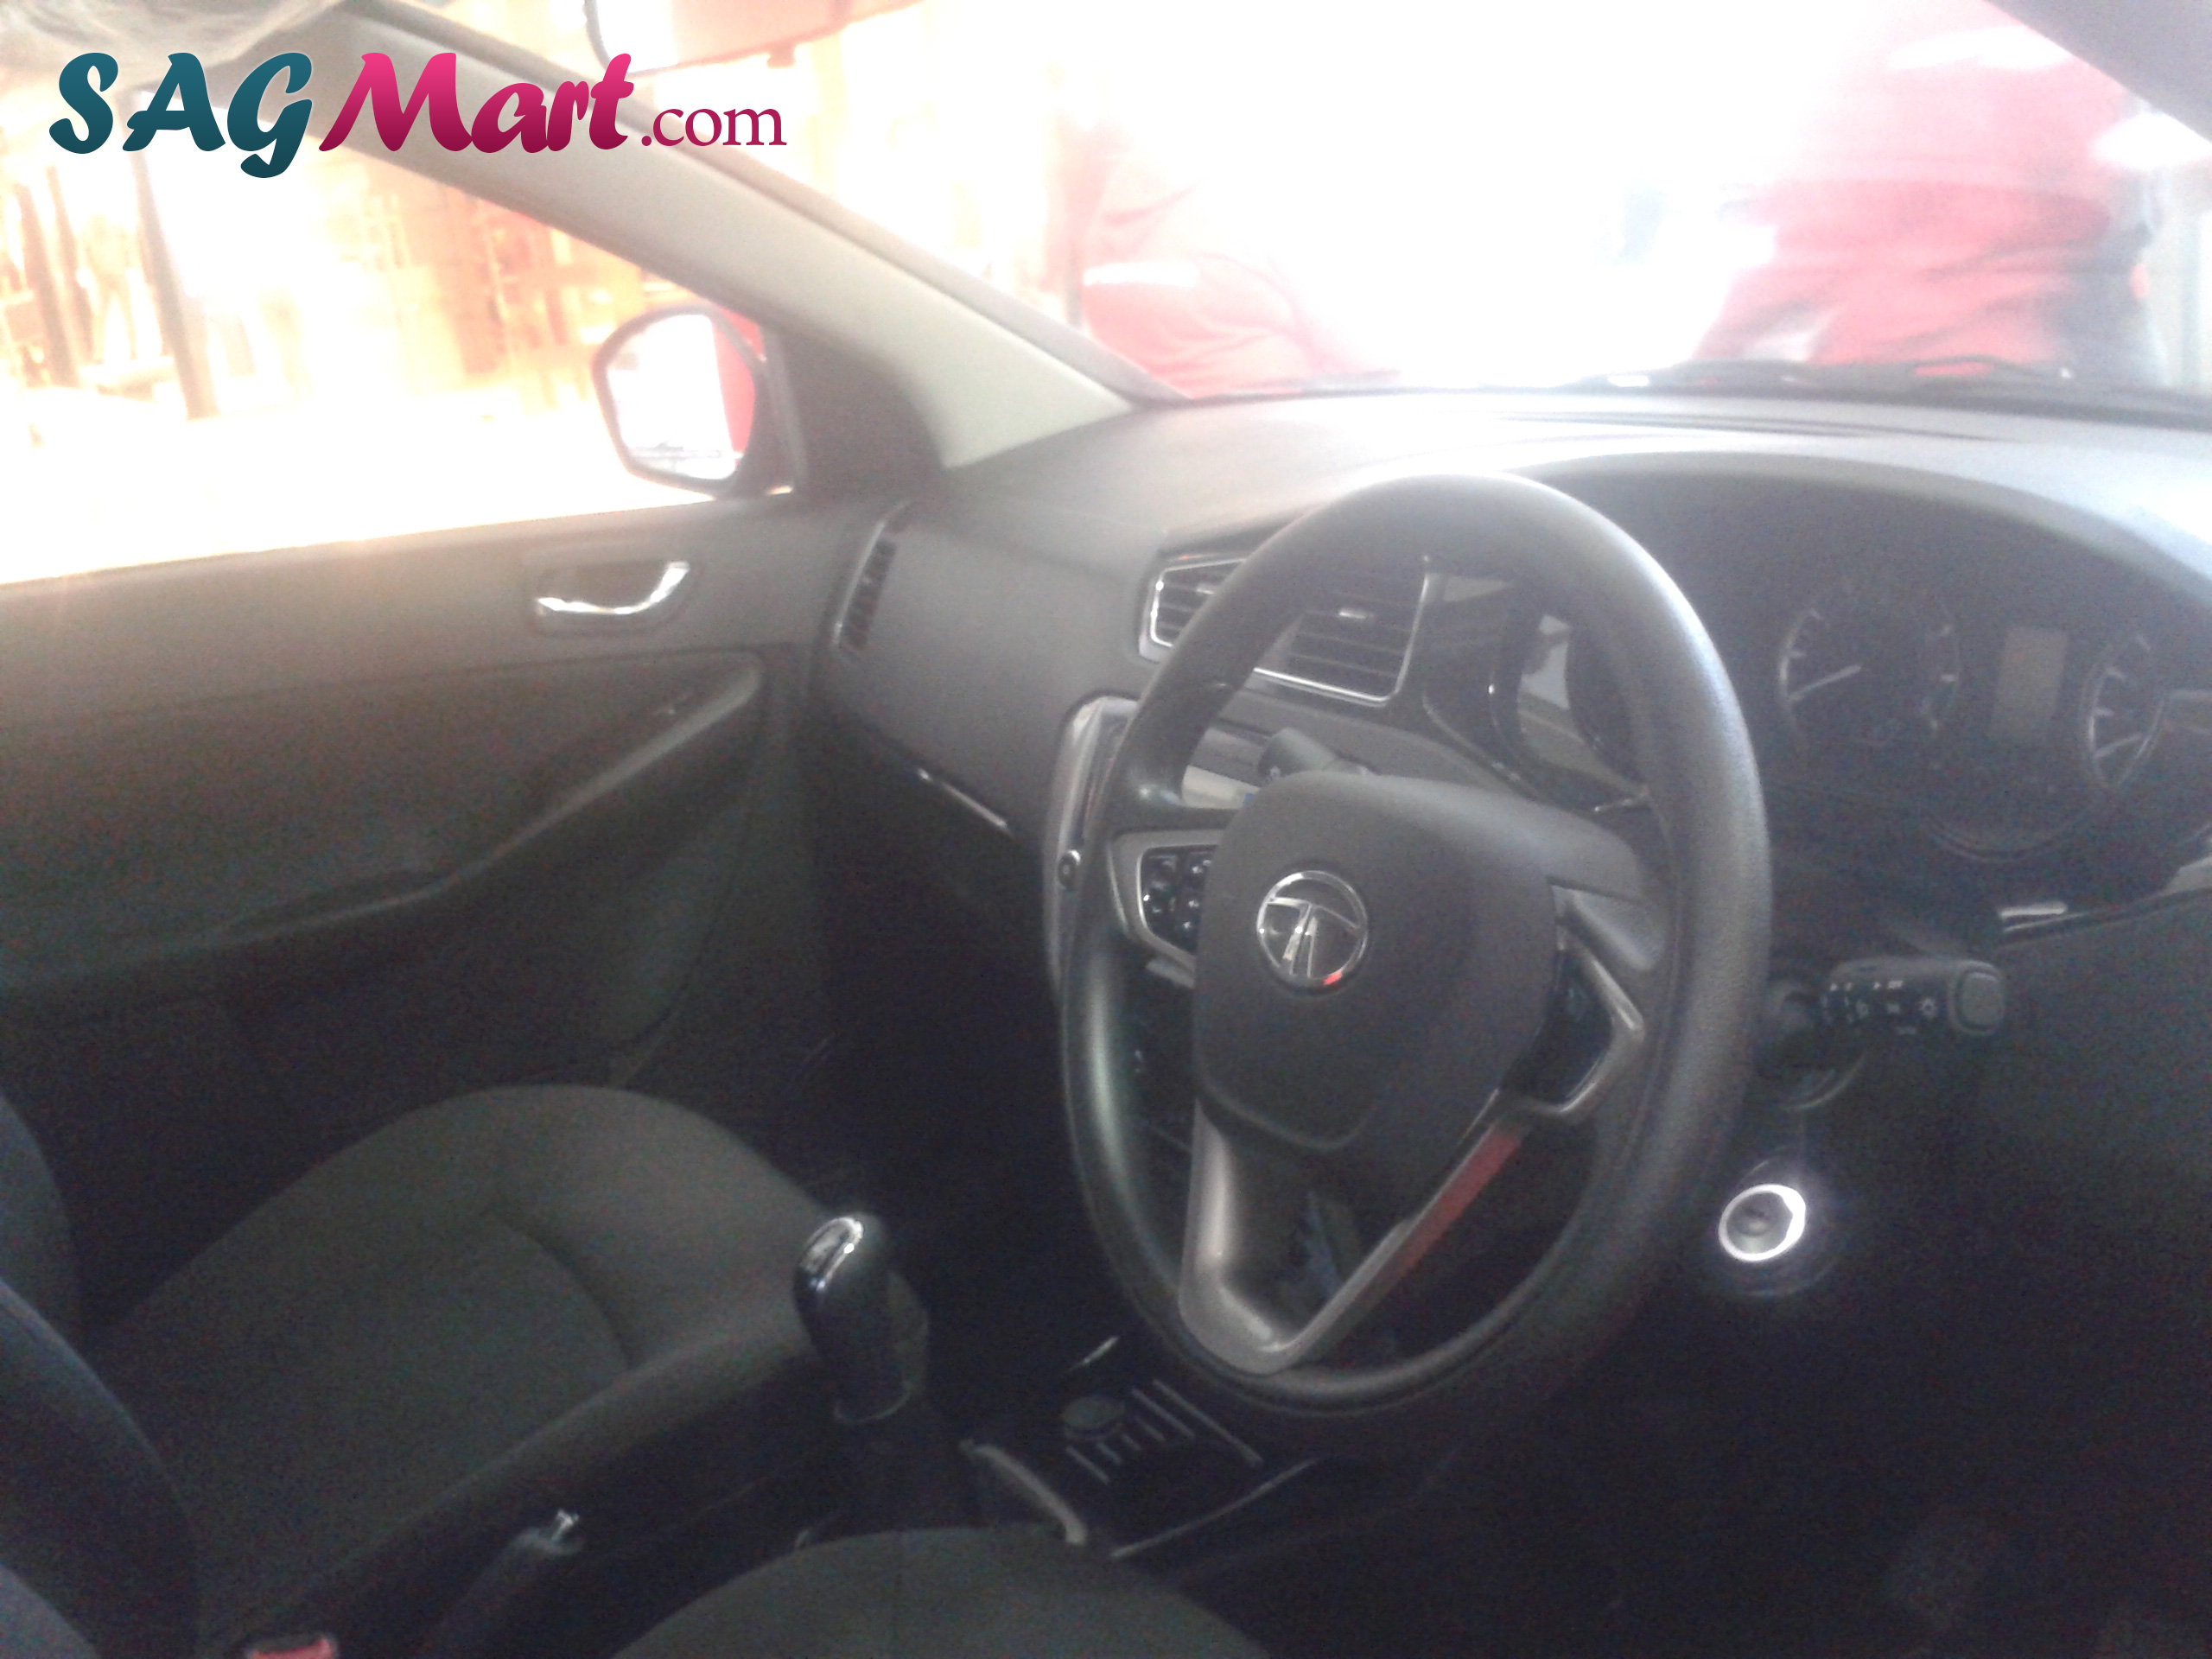 Tata Bolt Hatchback Interior